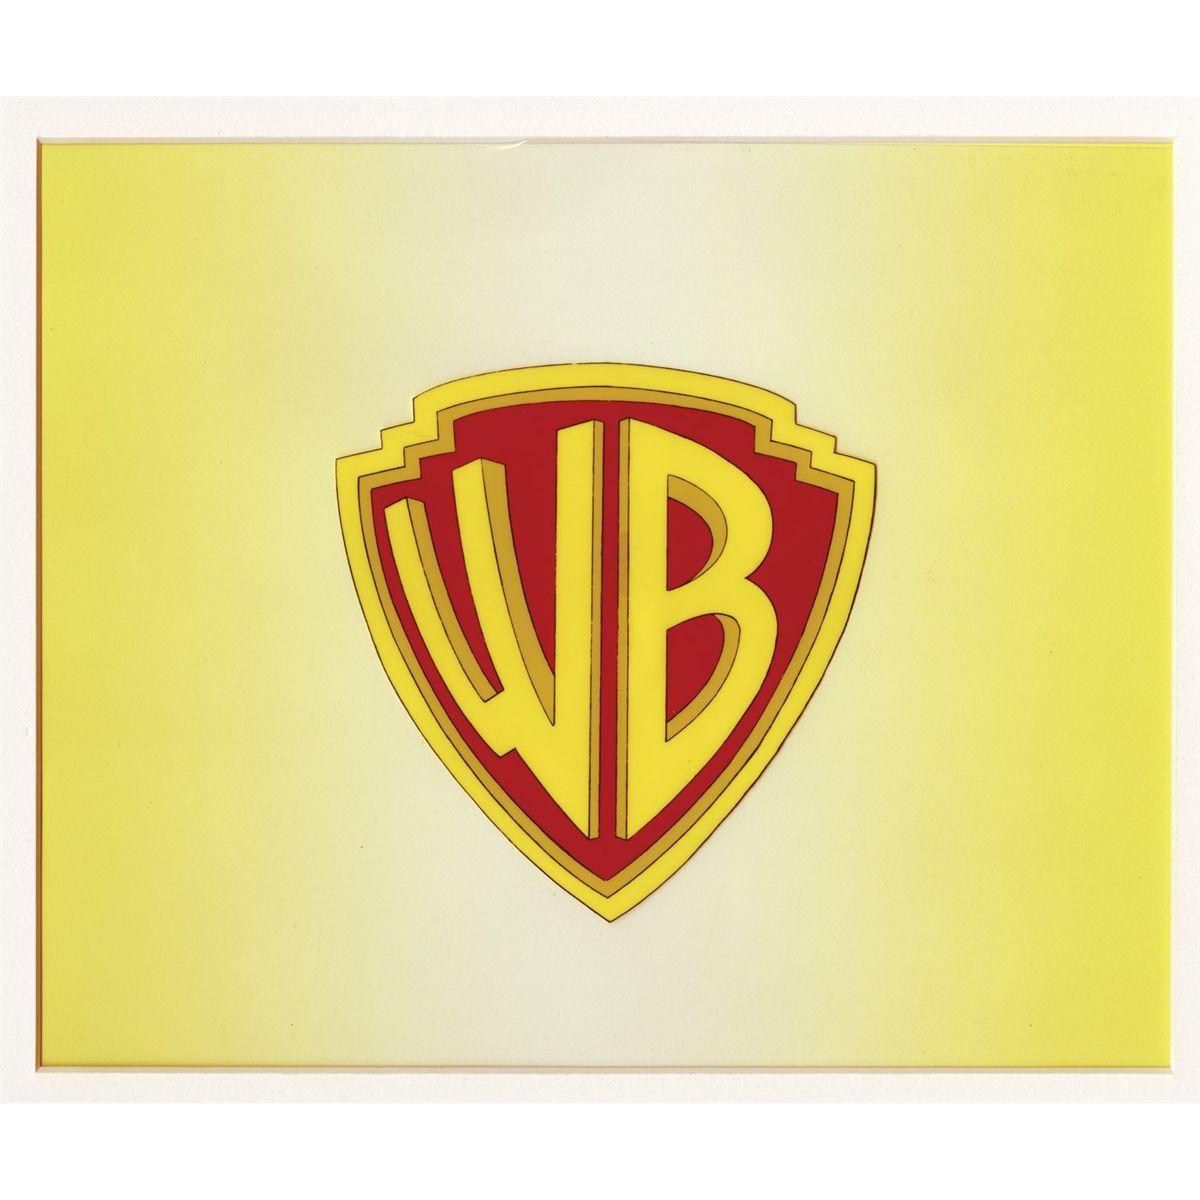 WarnerBros Shield Logo - Original production cel of Warner Bros. Shield from 24 Carrot Golden ...